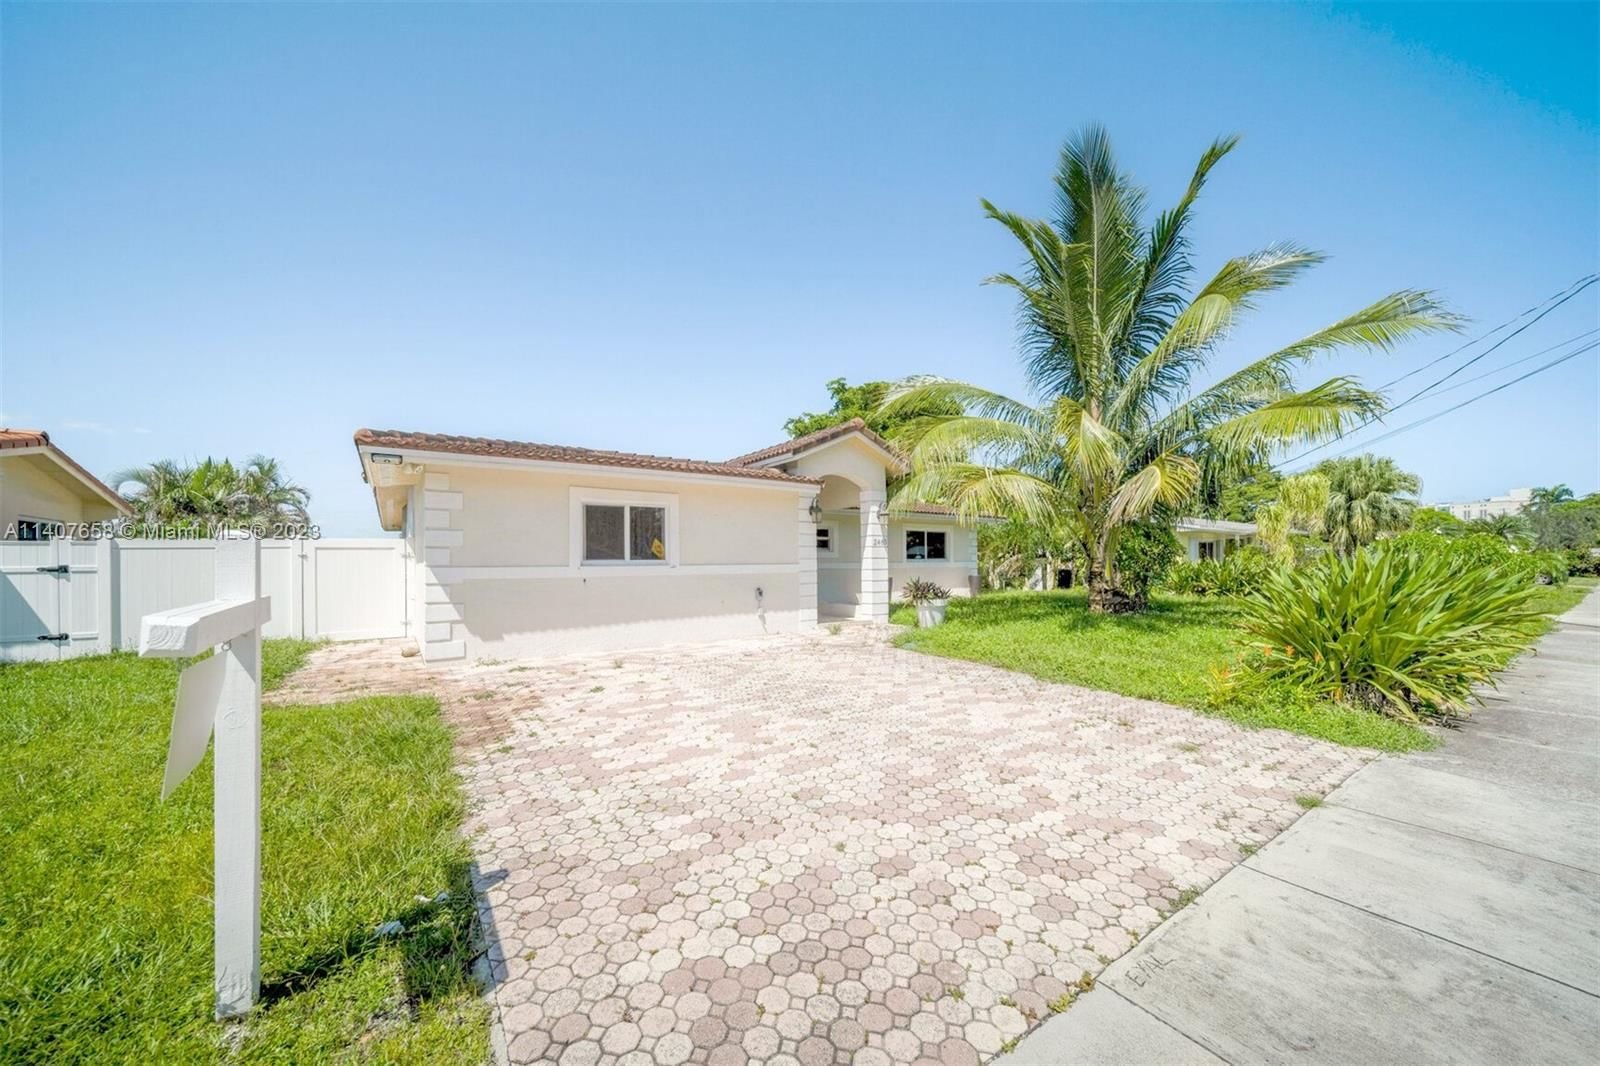 Real estate property located at 2465 209th Ter, Miami-Dade County, SUNSWEPT ISLE, Miami, FL